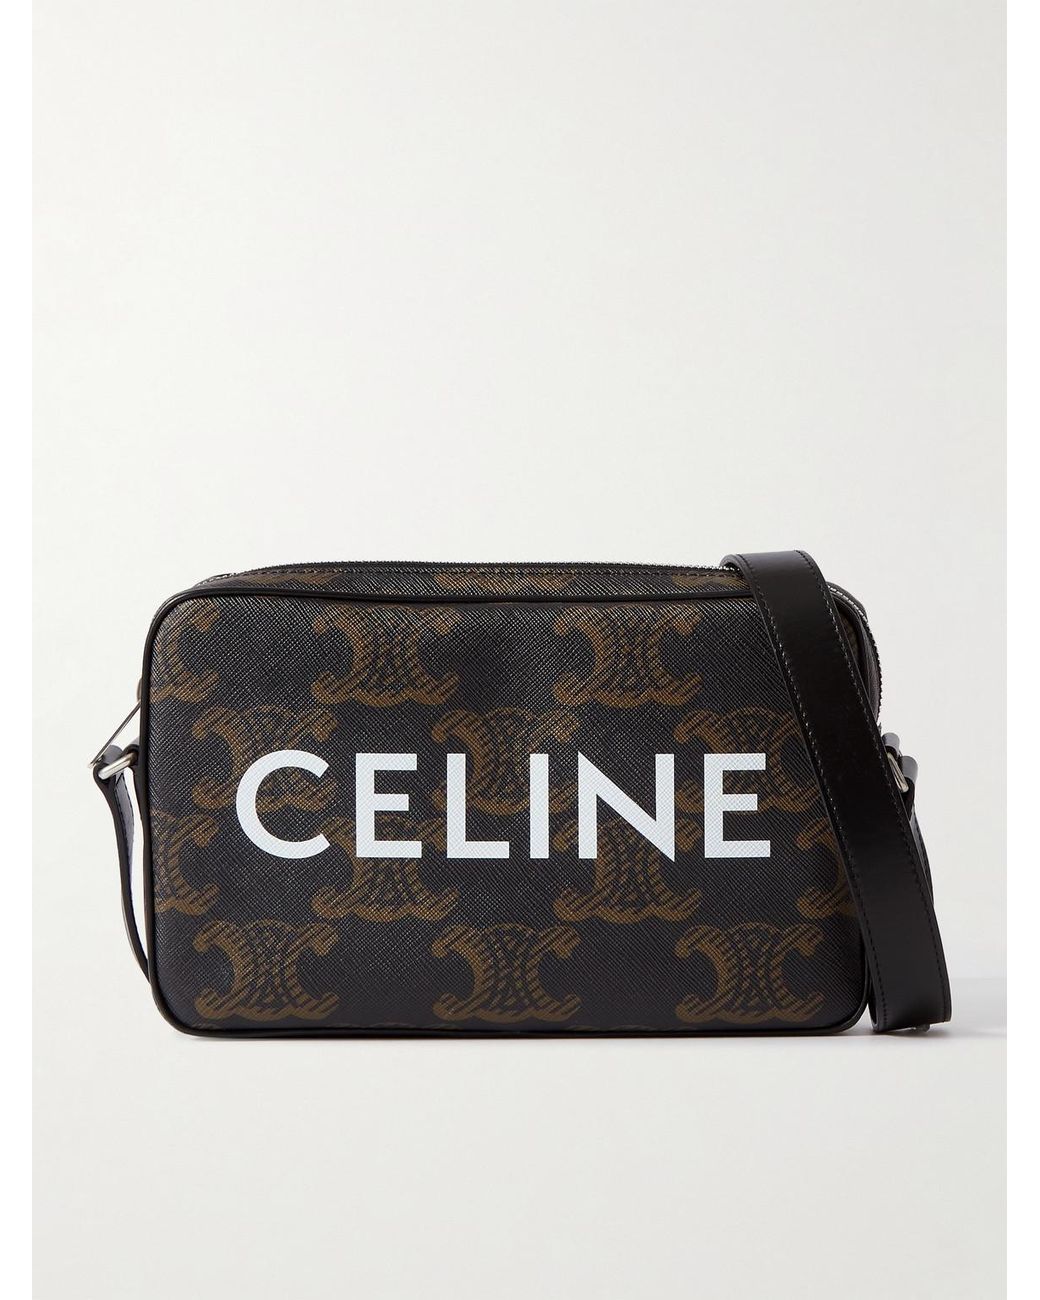 CELINE HOMME Triomphe Leather-Trimmed Logo-Print Coated-Canvas Backpack for  Men